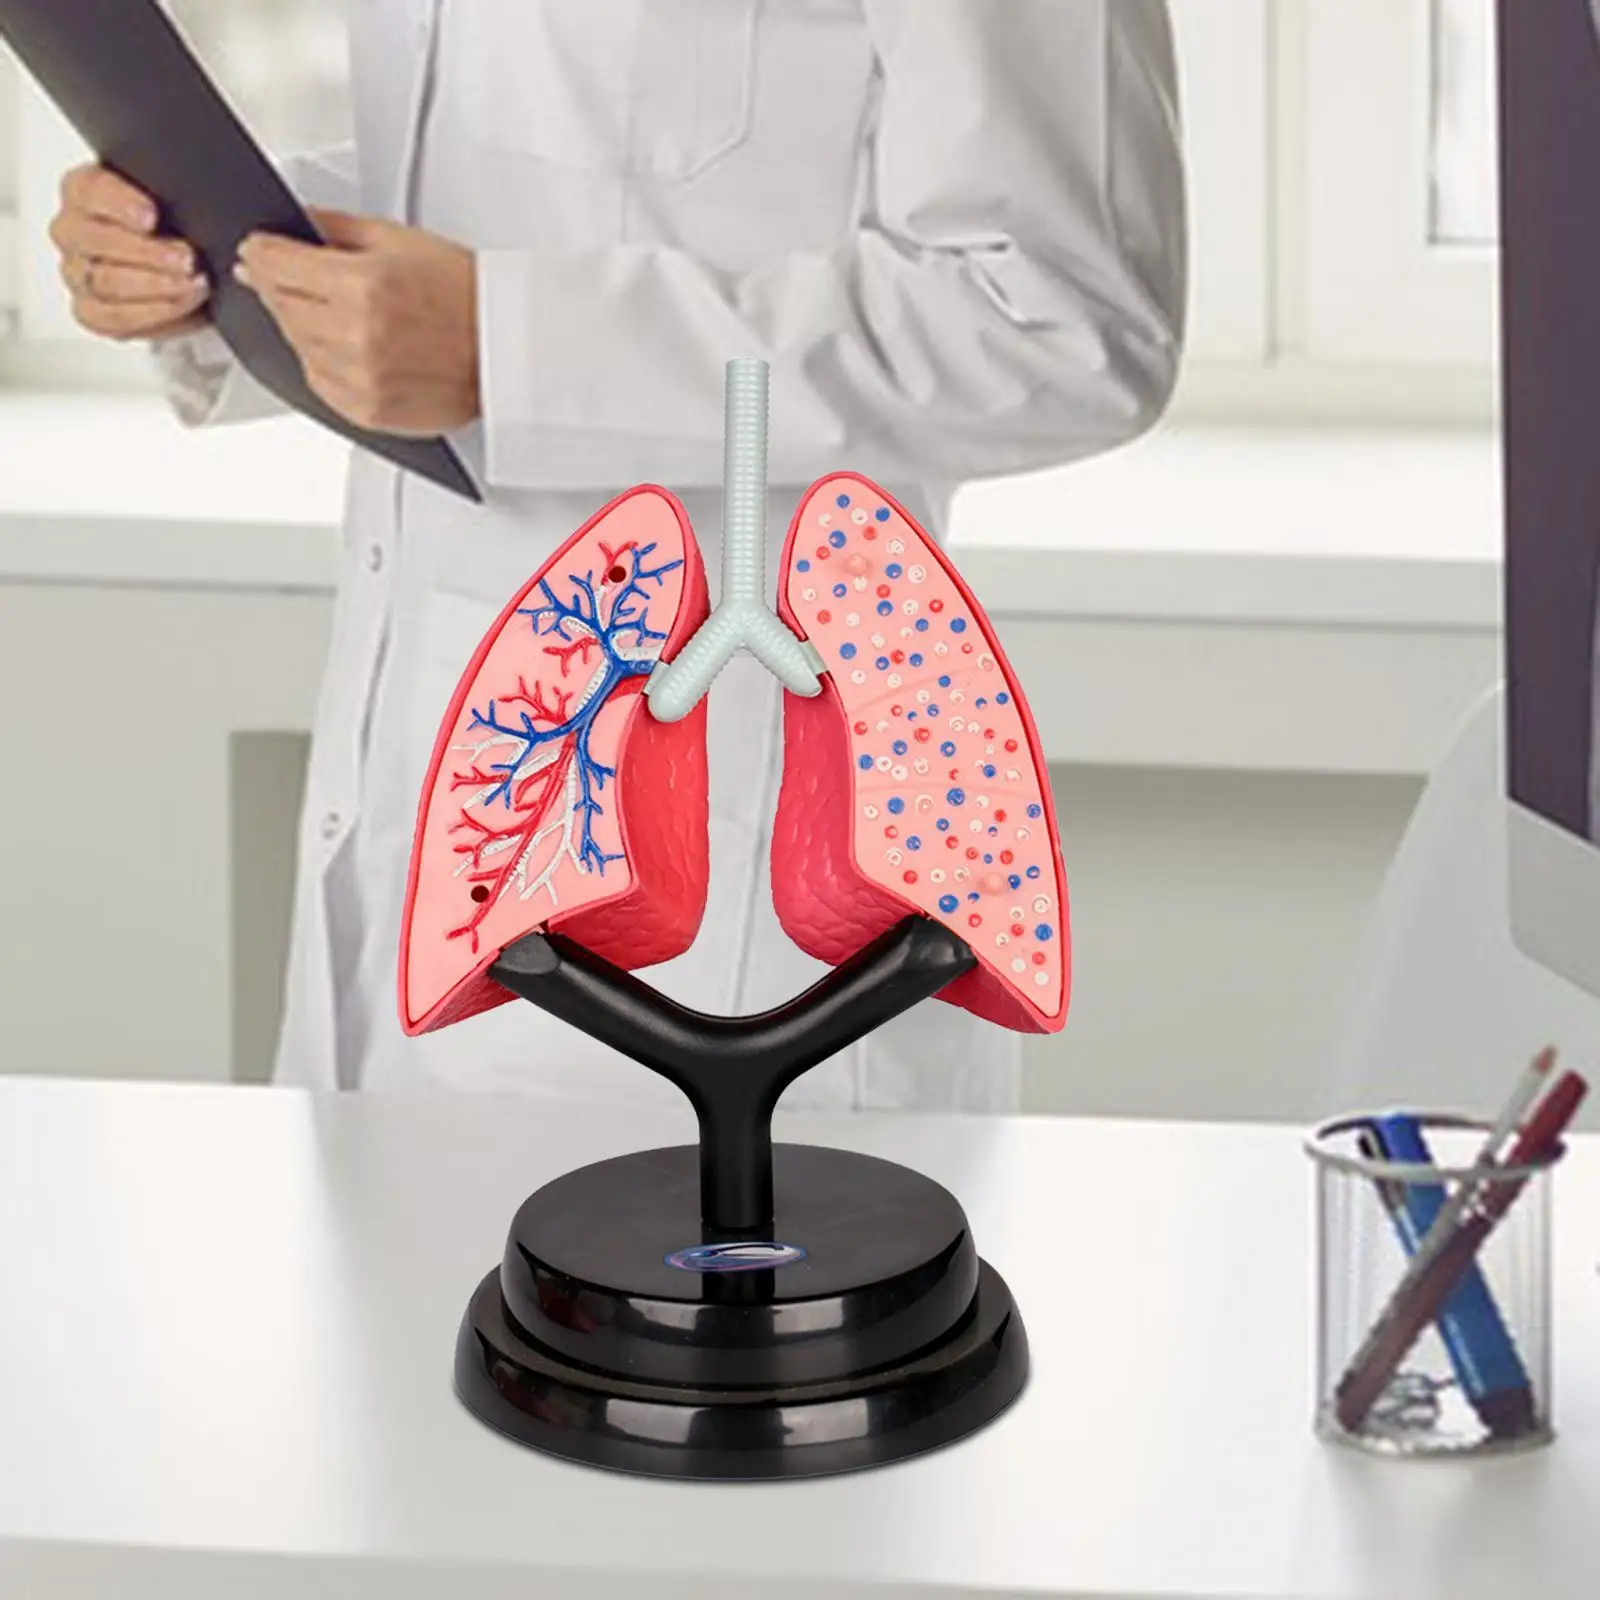 Respiratory System Model Human Lung Model for Demonstration Home Preschool